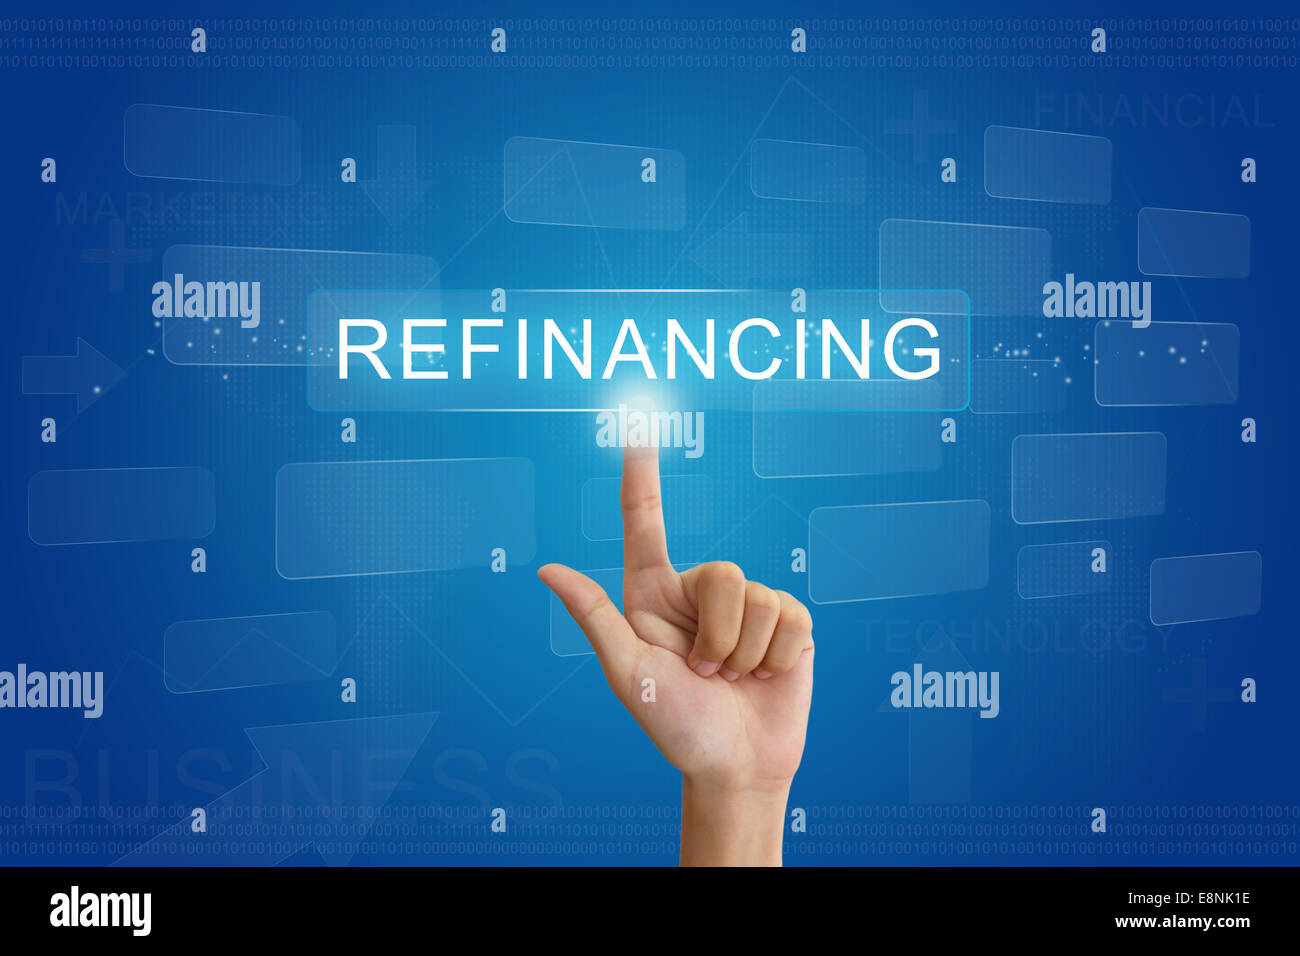 hand press on refinancing button on virtual screen Stock Photo